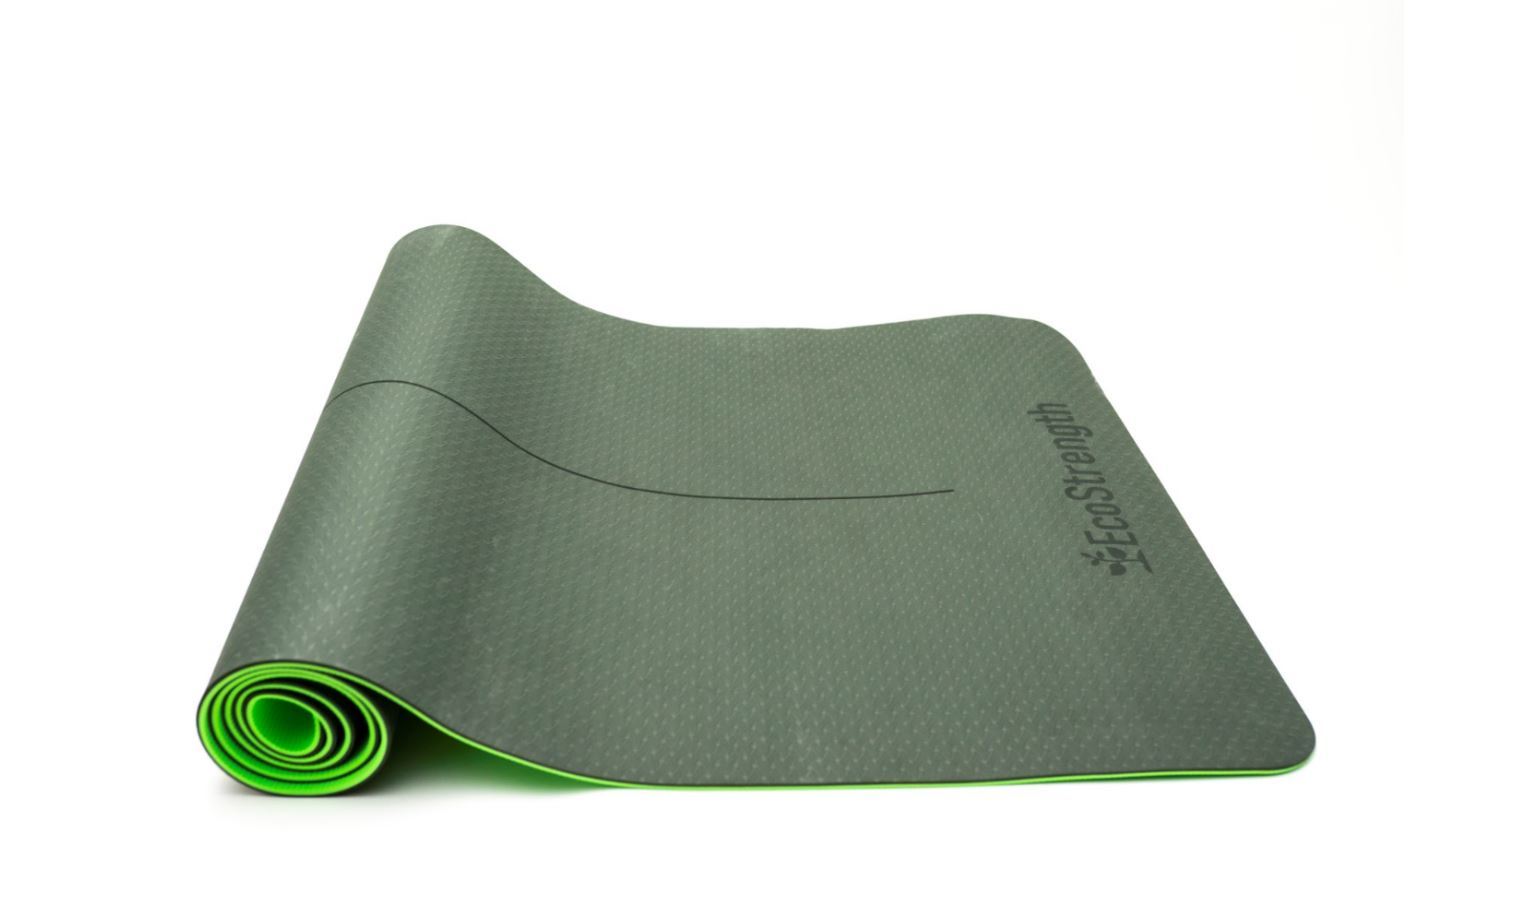 Eco Strength | Green Yoga Mat, Yoga Mat, Eco Strength, Defiance Outdoor Gear Co.